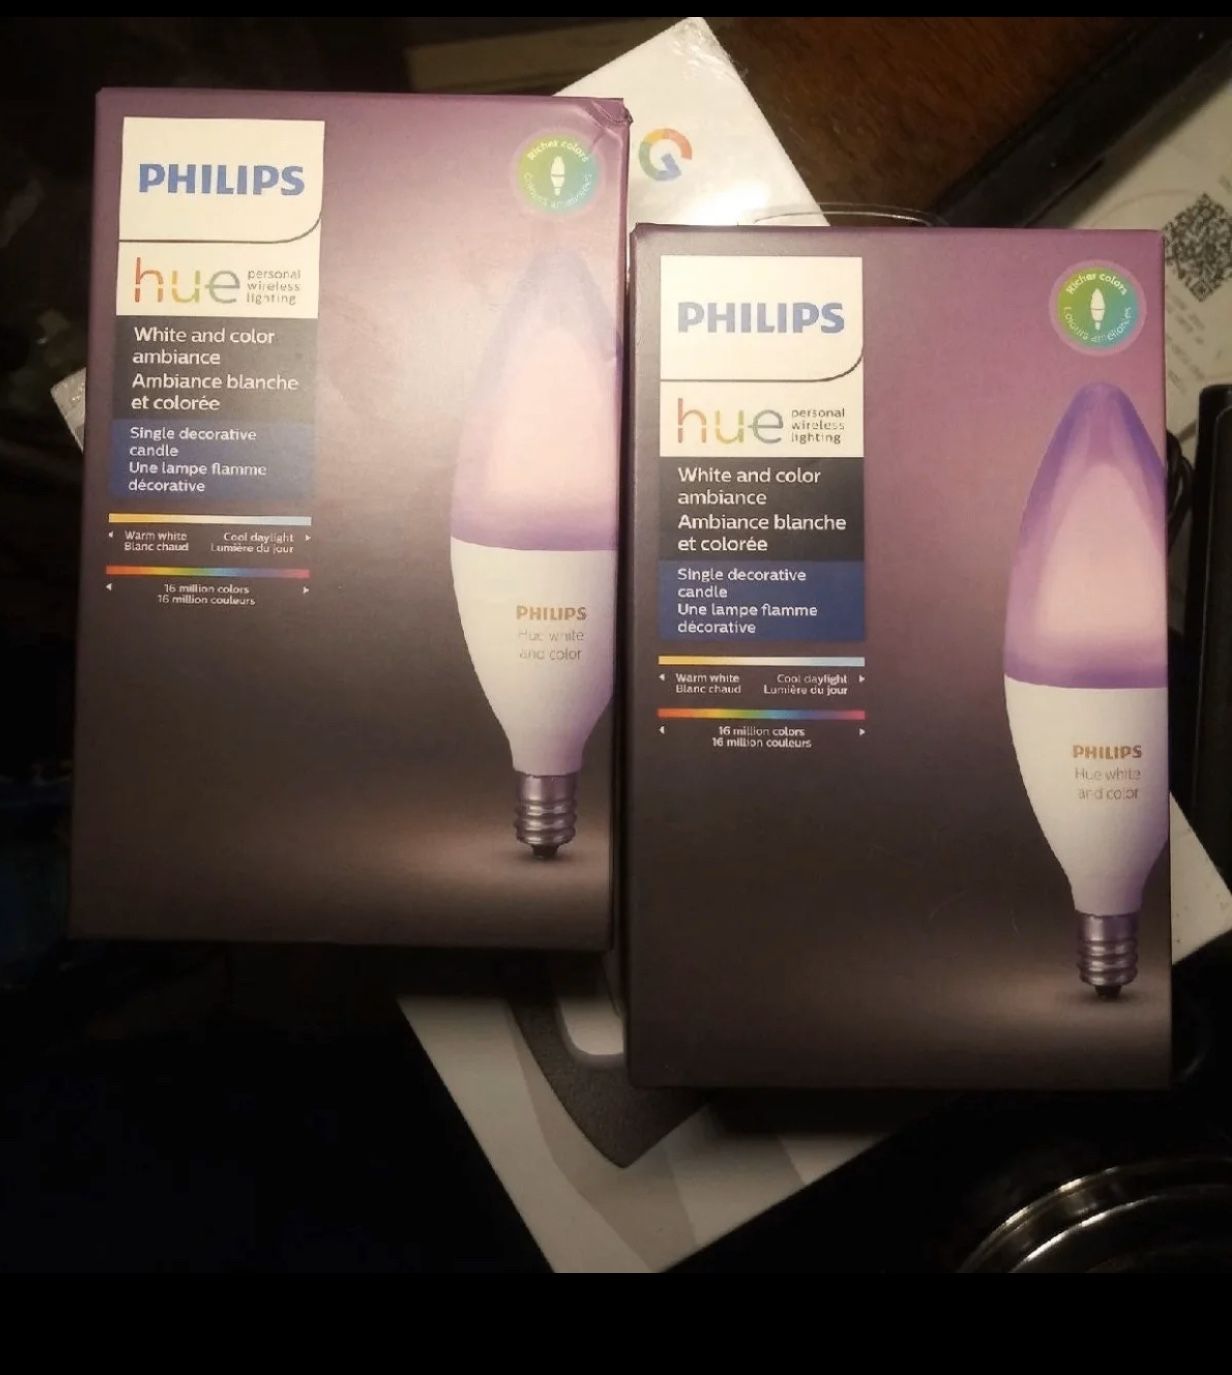 Phillips hue color bulbs